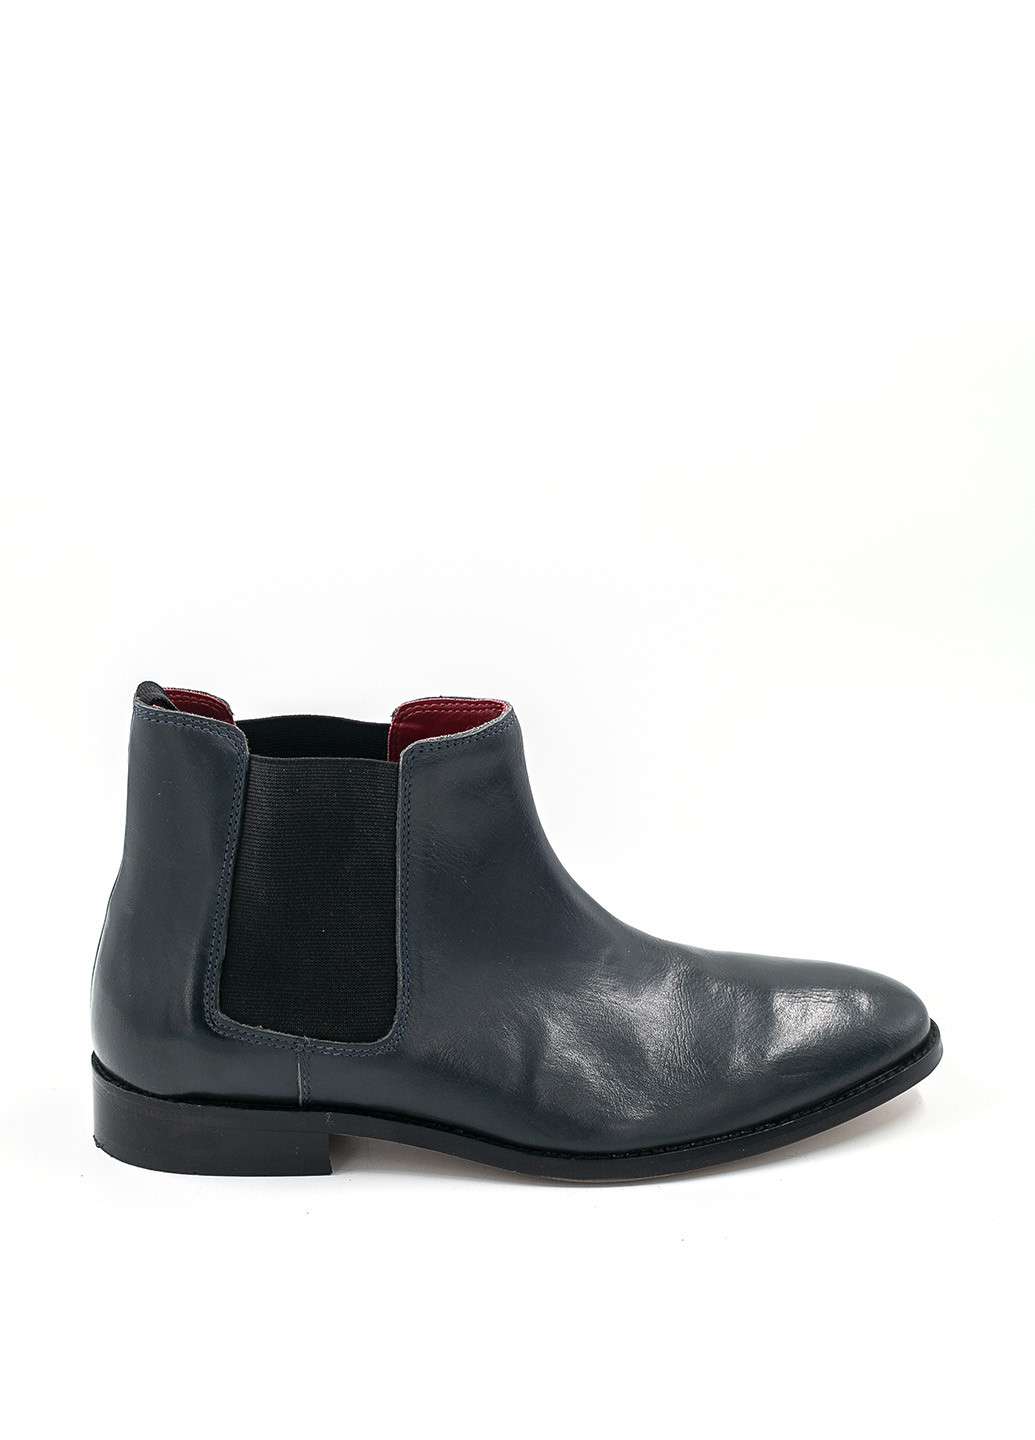 Темно-серые осенние ботинки челси Christian Laurier